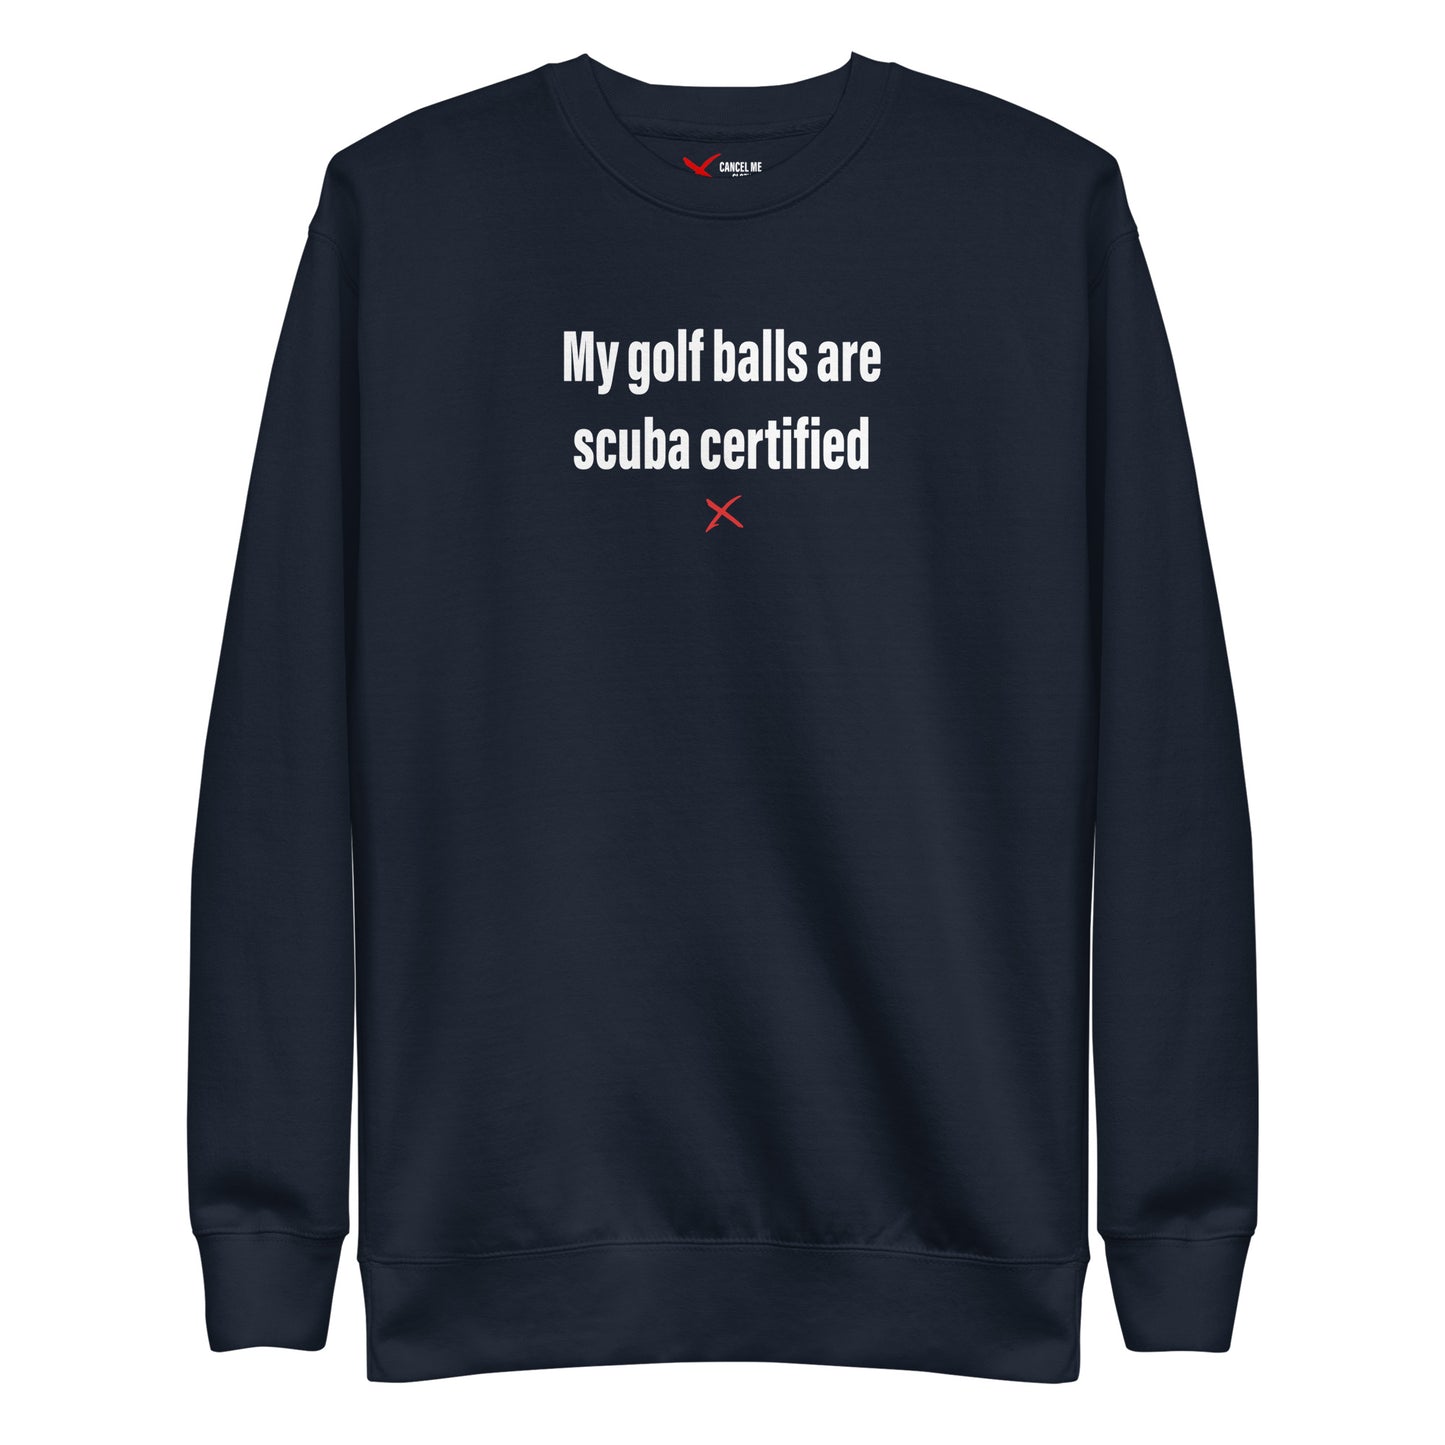 My golf balls are scuba certified - Sweatshirt